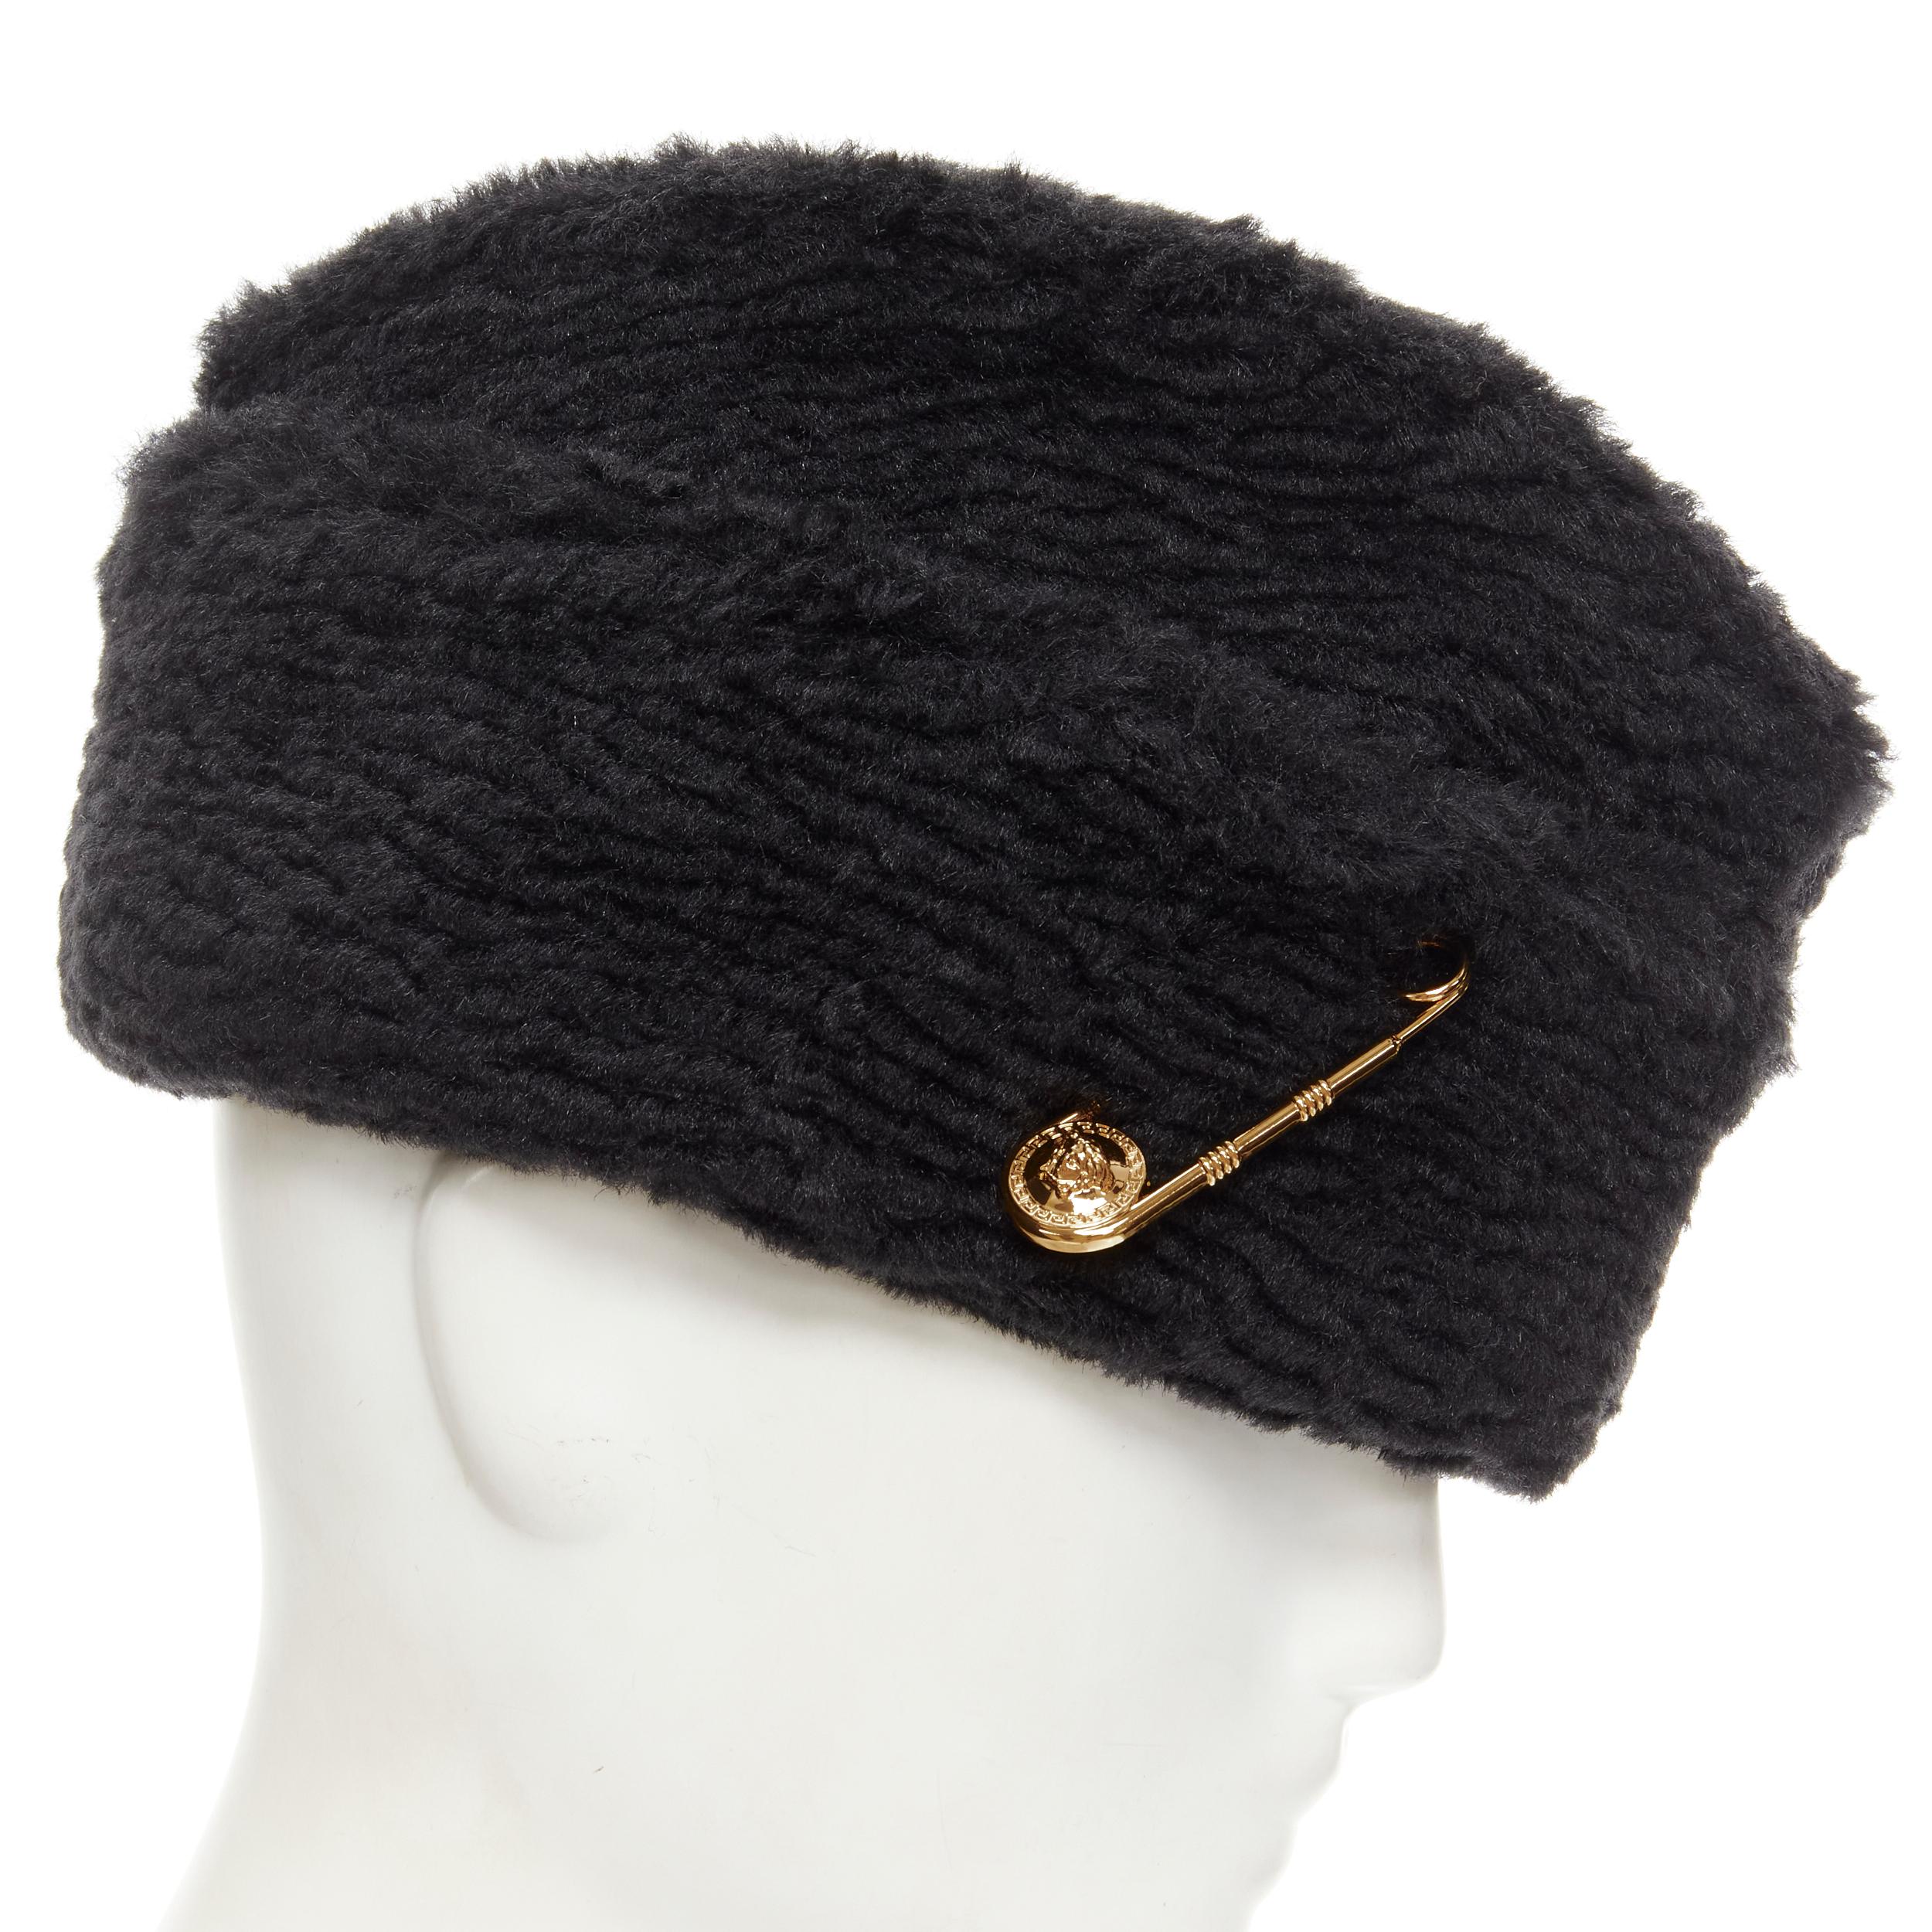 Women's or Men's new VERSACE Runway black faux fur gold Medusa safety pin hat 57cm M 7 1/8